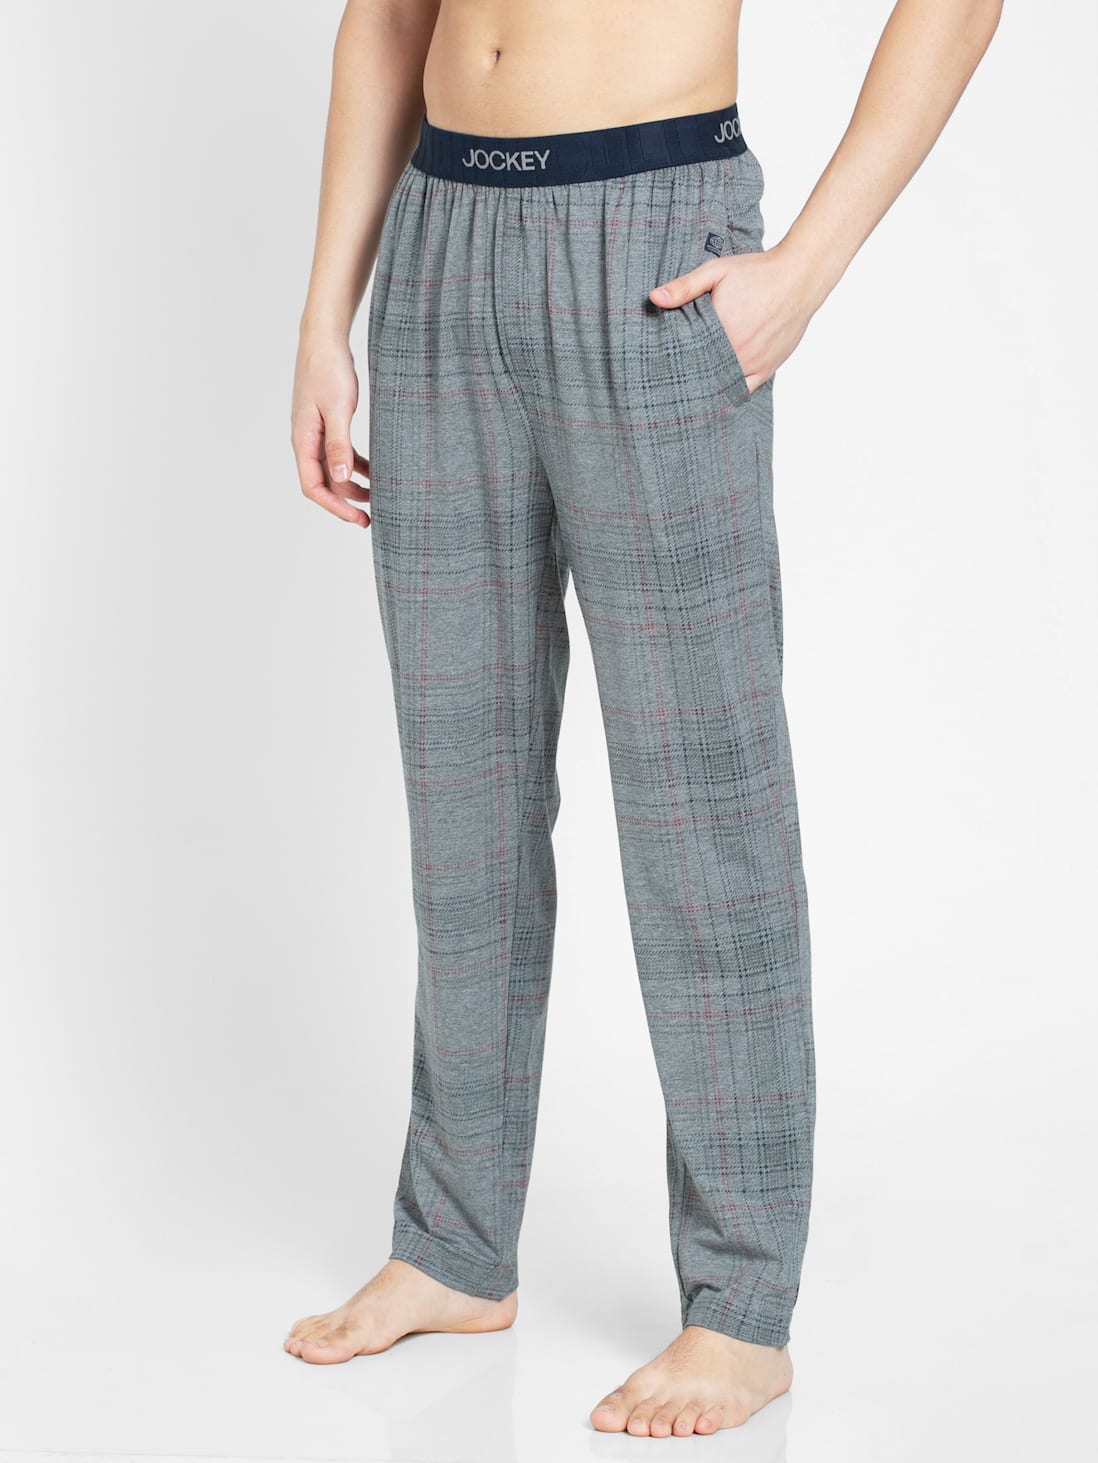 Jockey International Collection Men's Tencel Micro Modal Cotton Elastane Stretch Regular Fit Checkered Pyjama with Side Pockets - ShopIMO